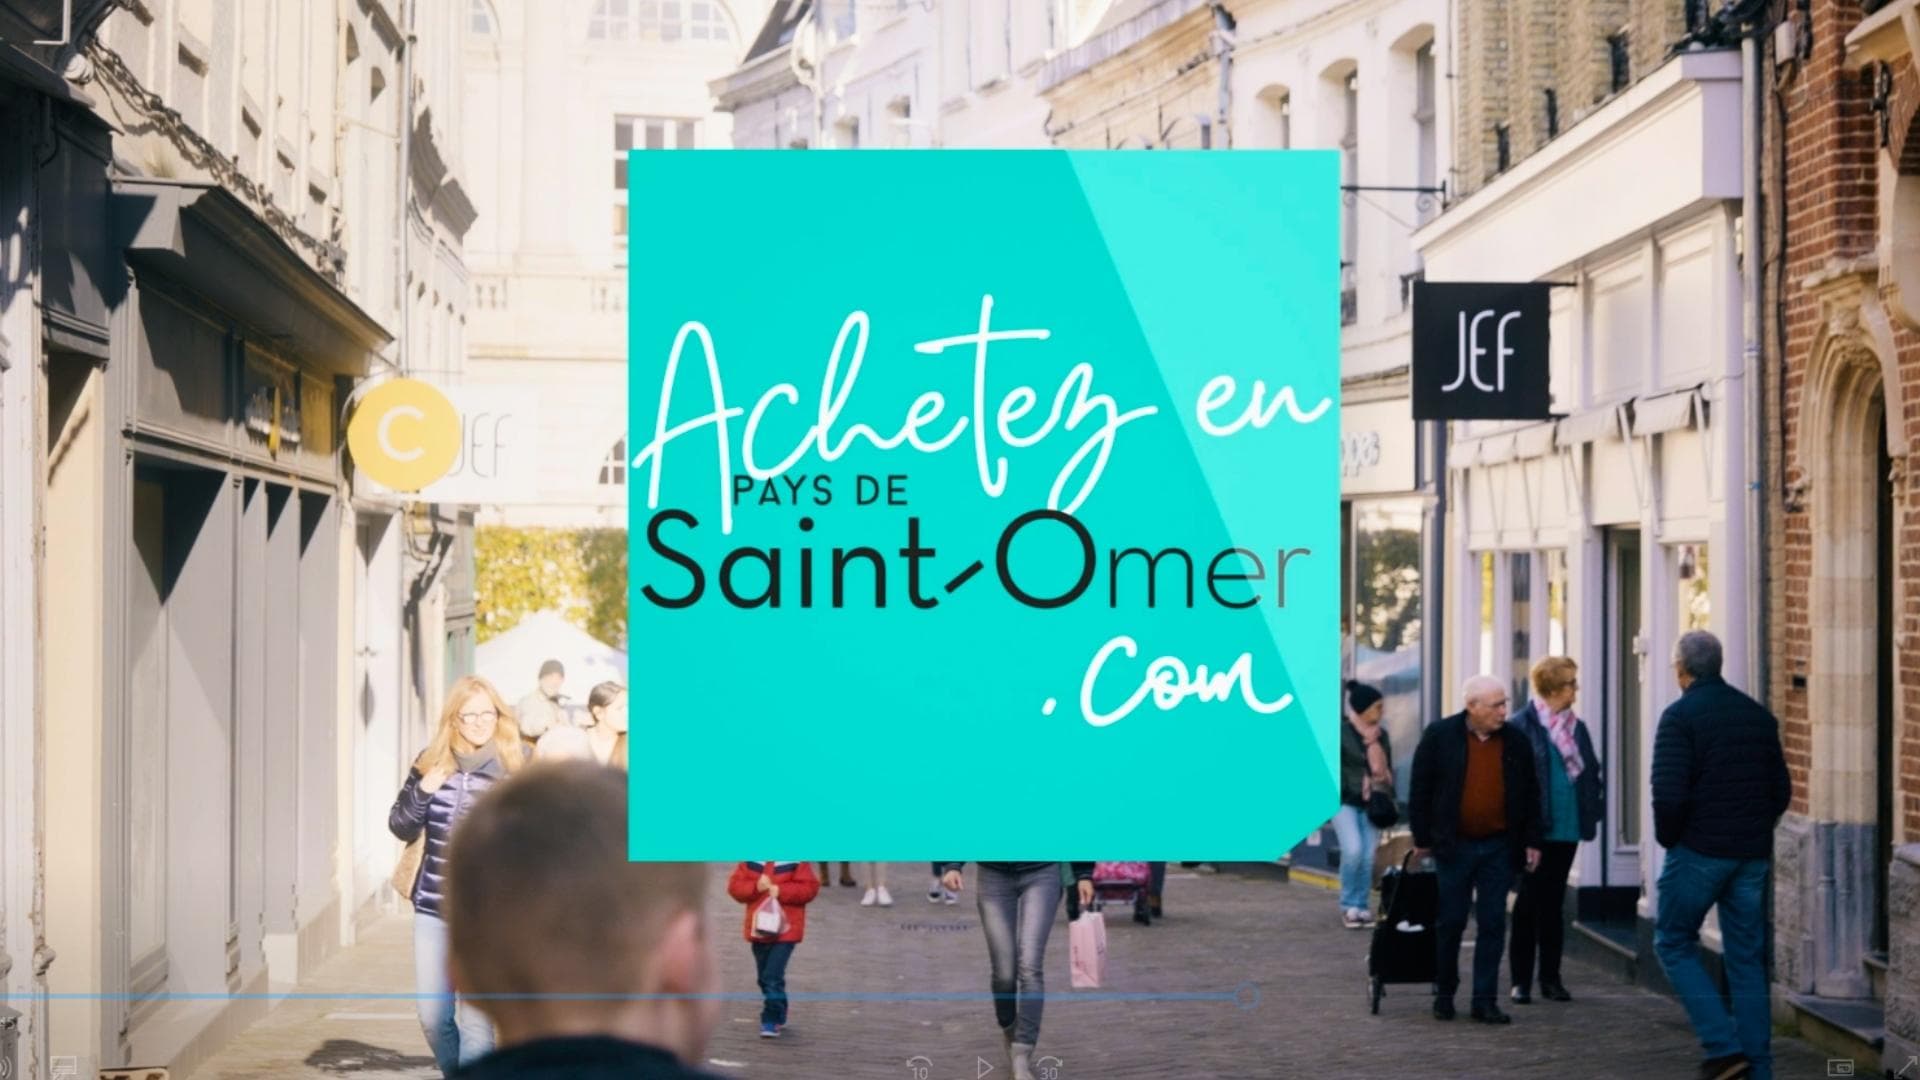 Saint Omer